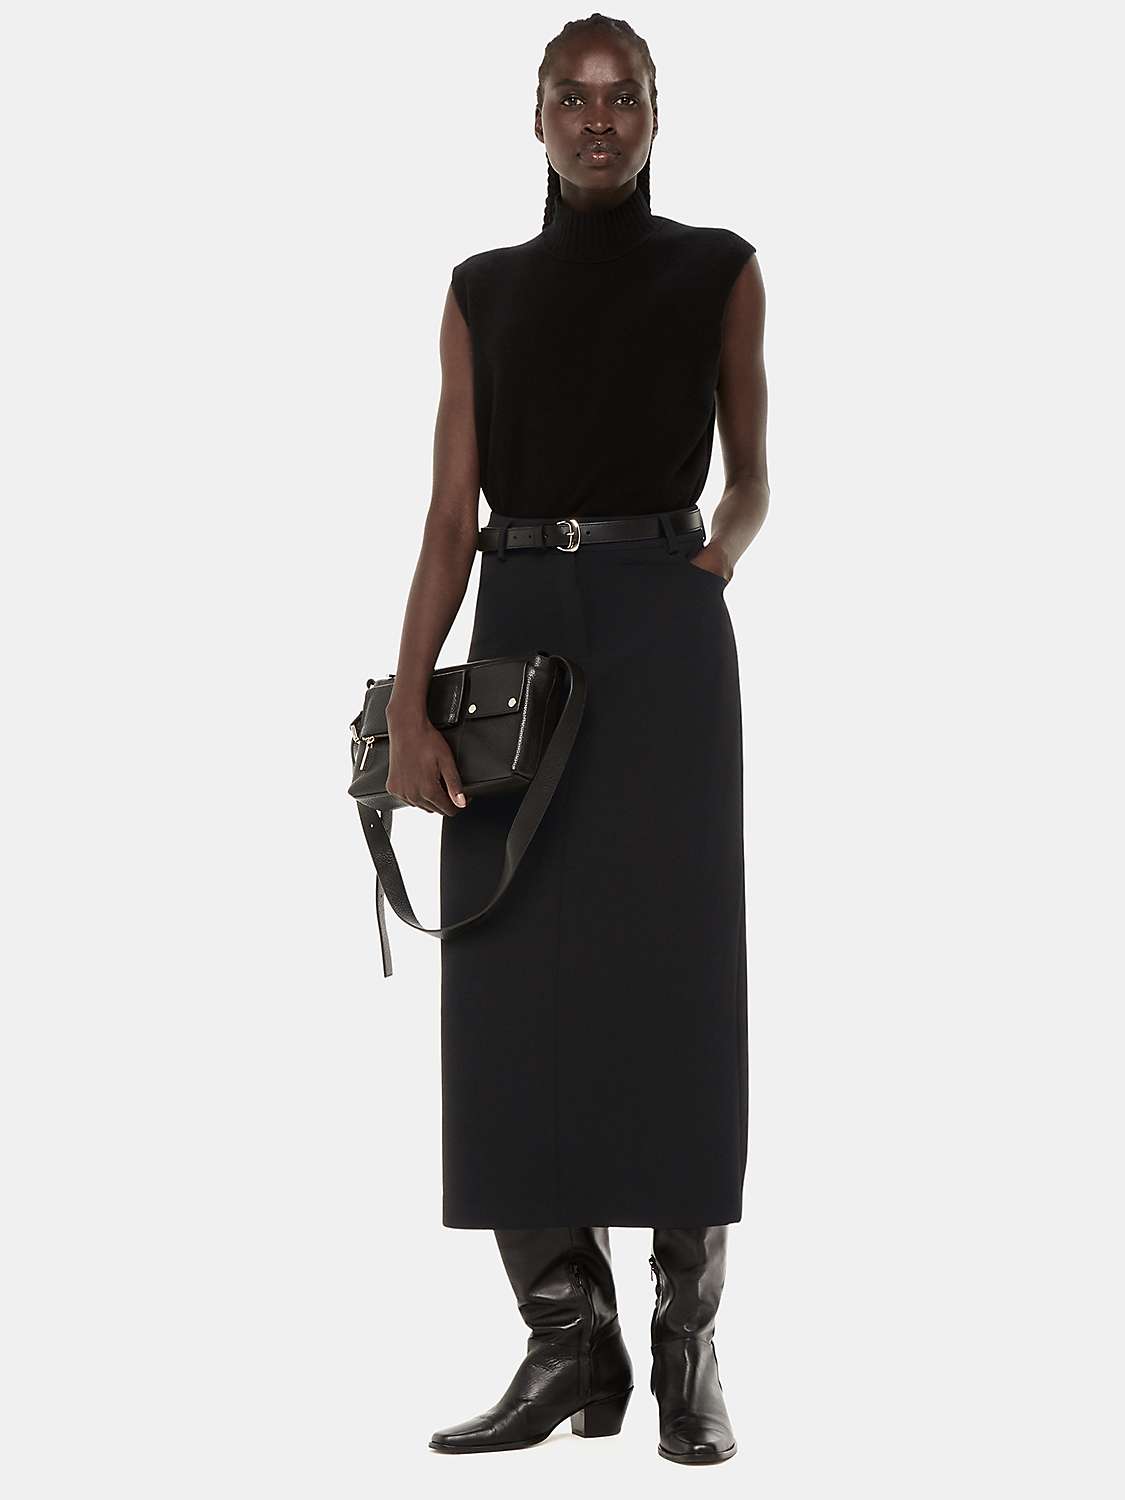 Buy Whistles Petite Abigail Tailored Midi Skirt, Black Online at johnlewis.com